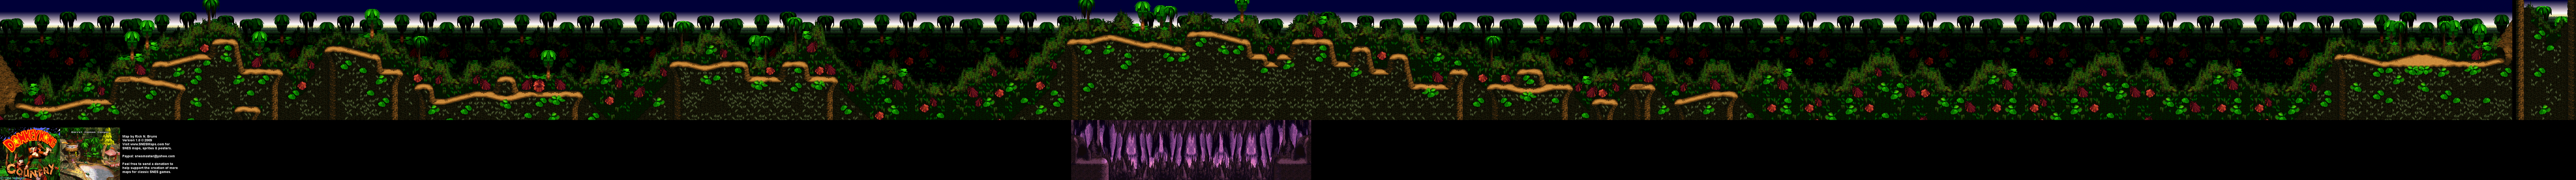 Donkey Kong Country - Level 5 - Barrel Cannon Canyon - Super Nintendo SNES Background Map